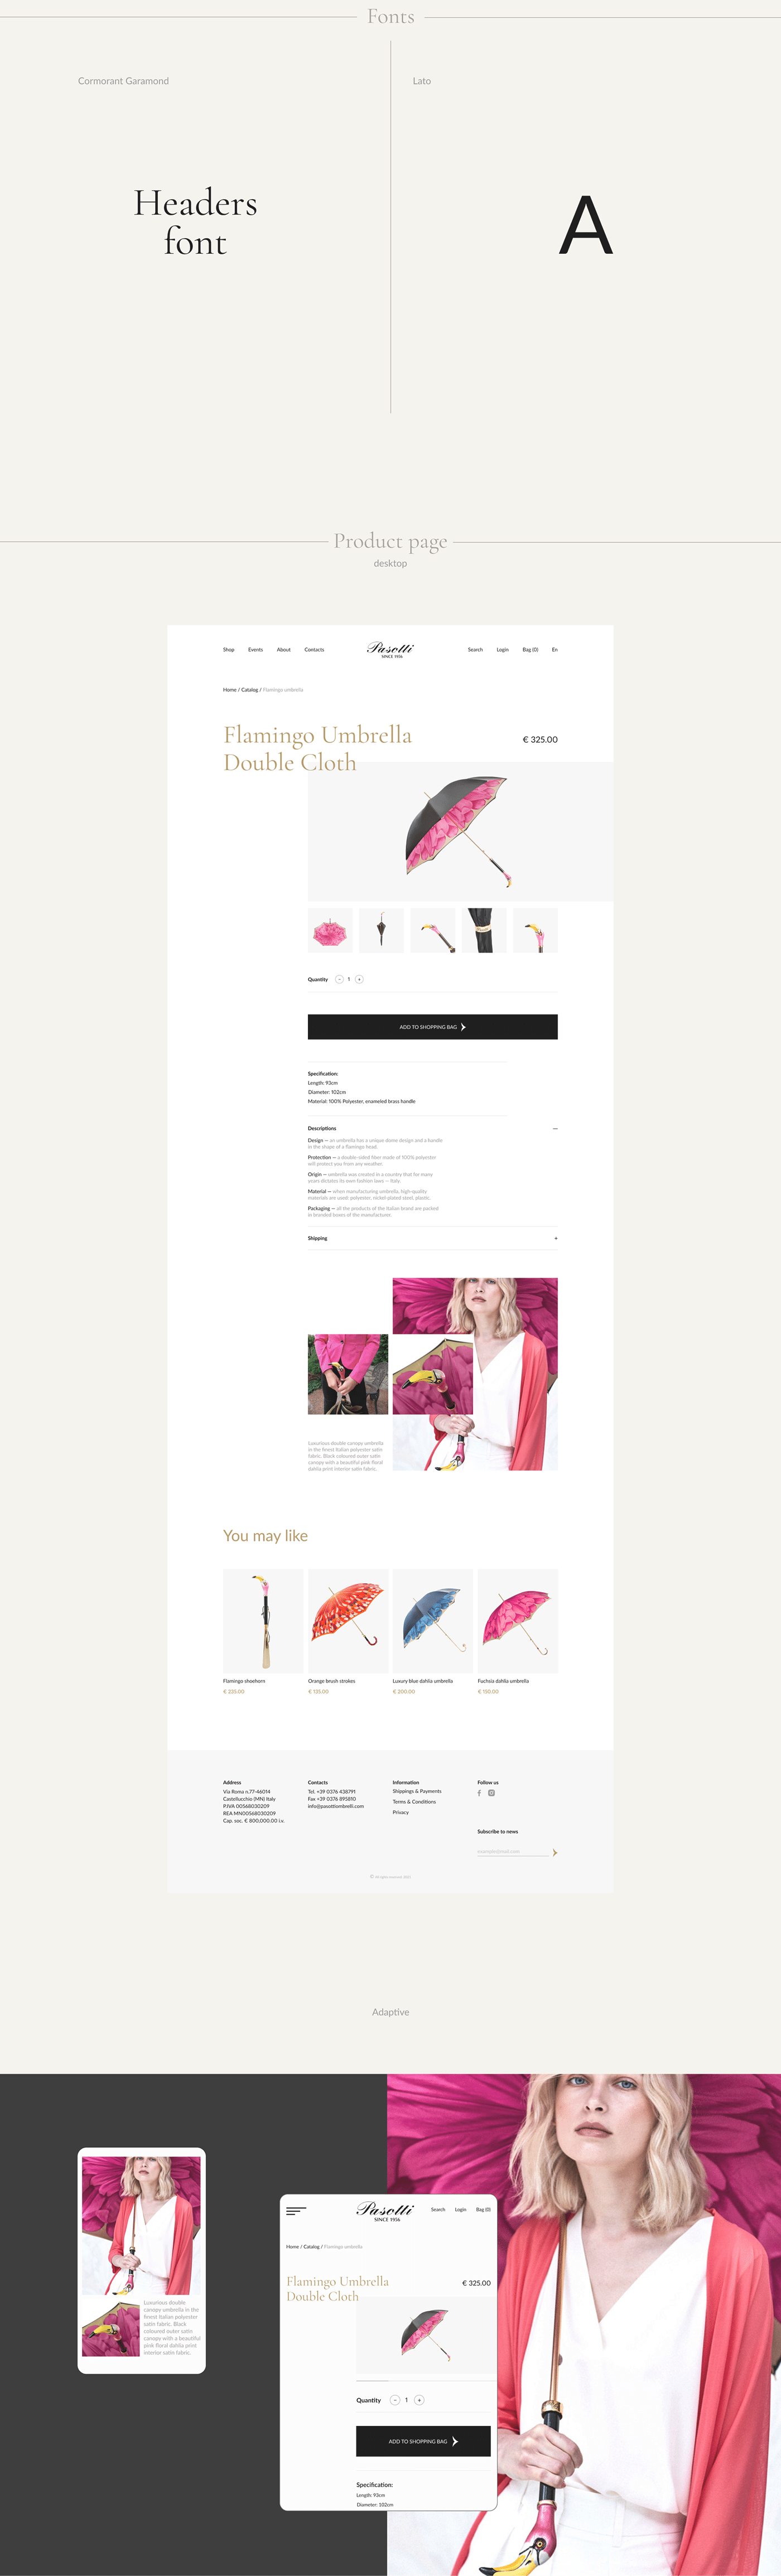 Ecommerce Fashion  Italy luxury brand online store typography   umbrellas uxui Webdesign интернет магазин